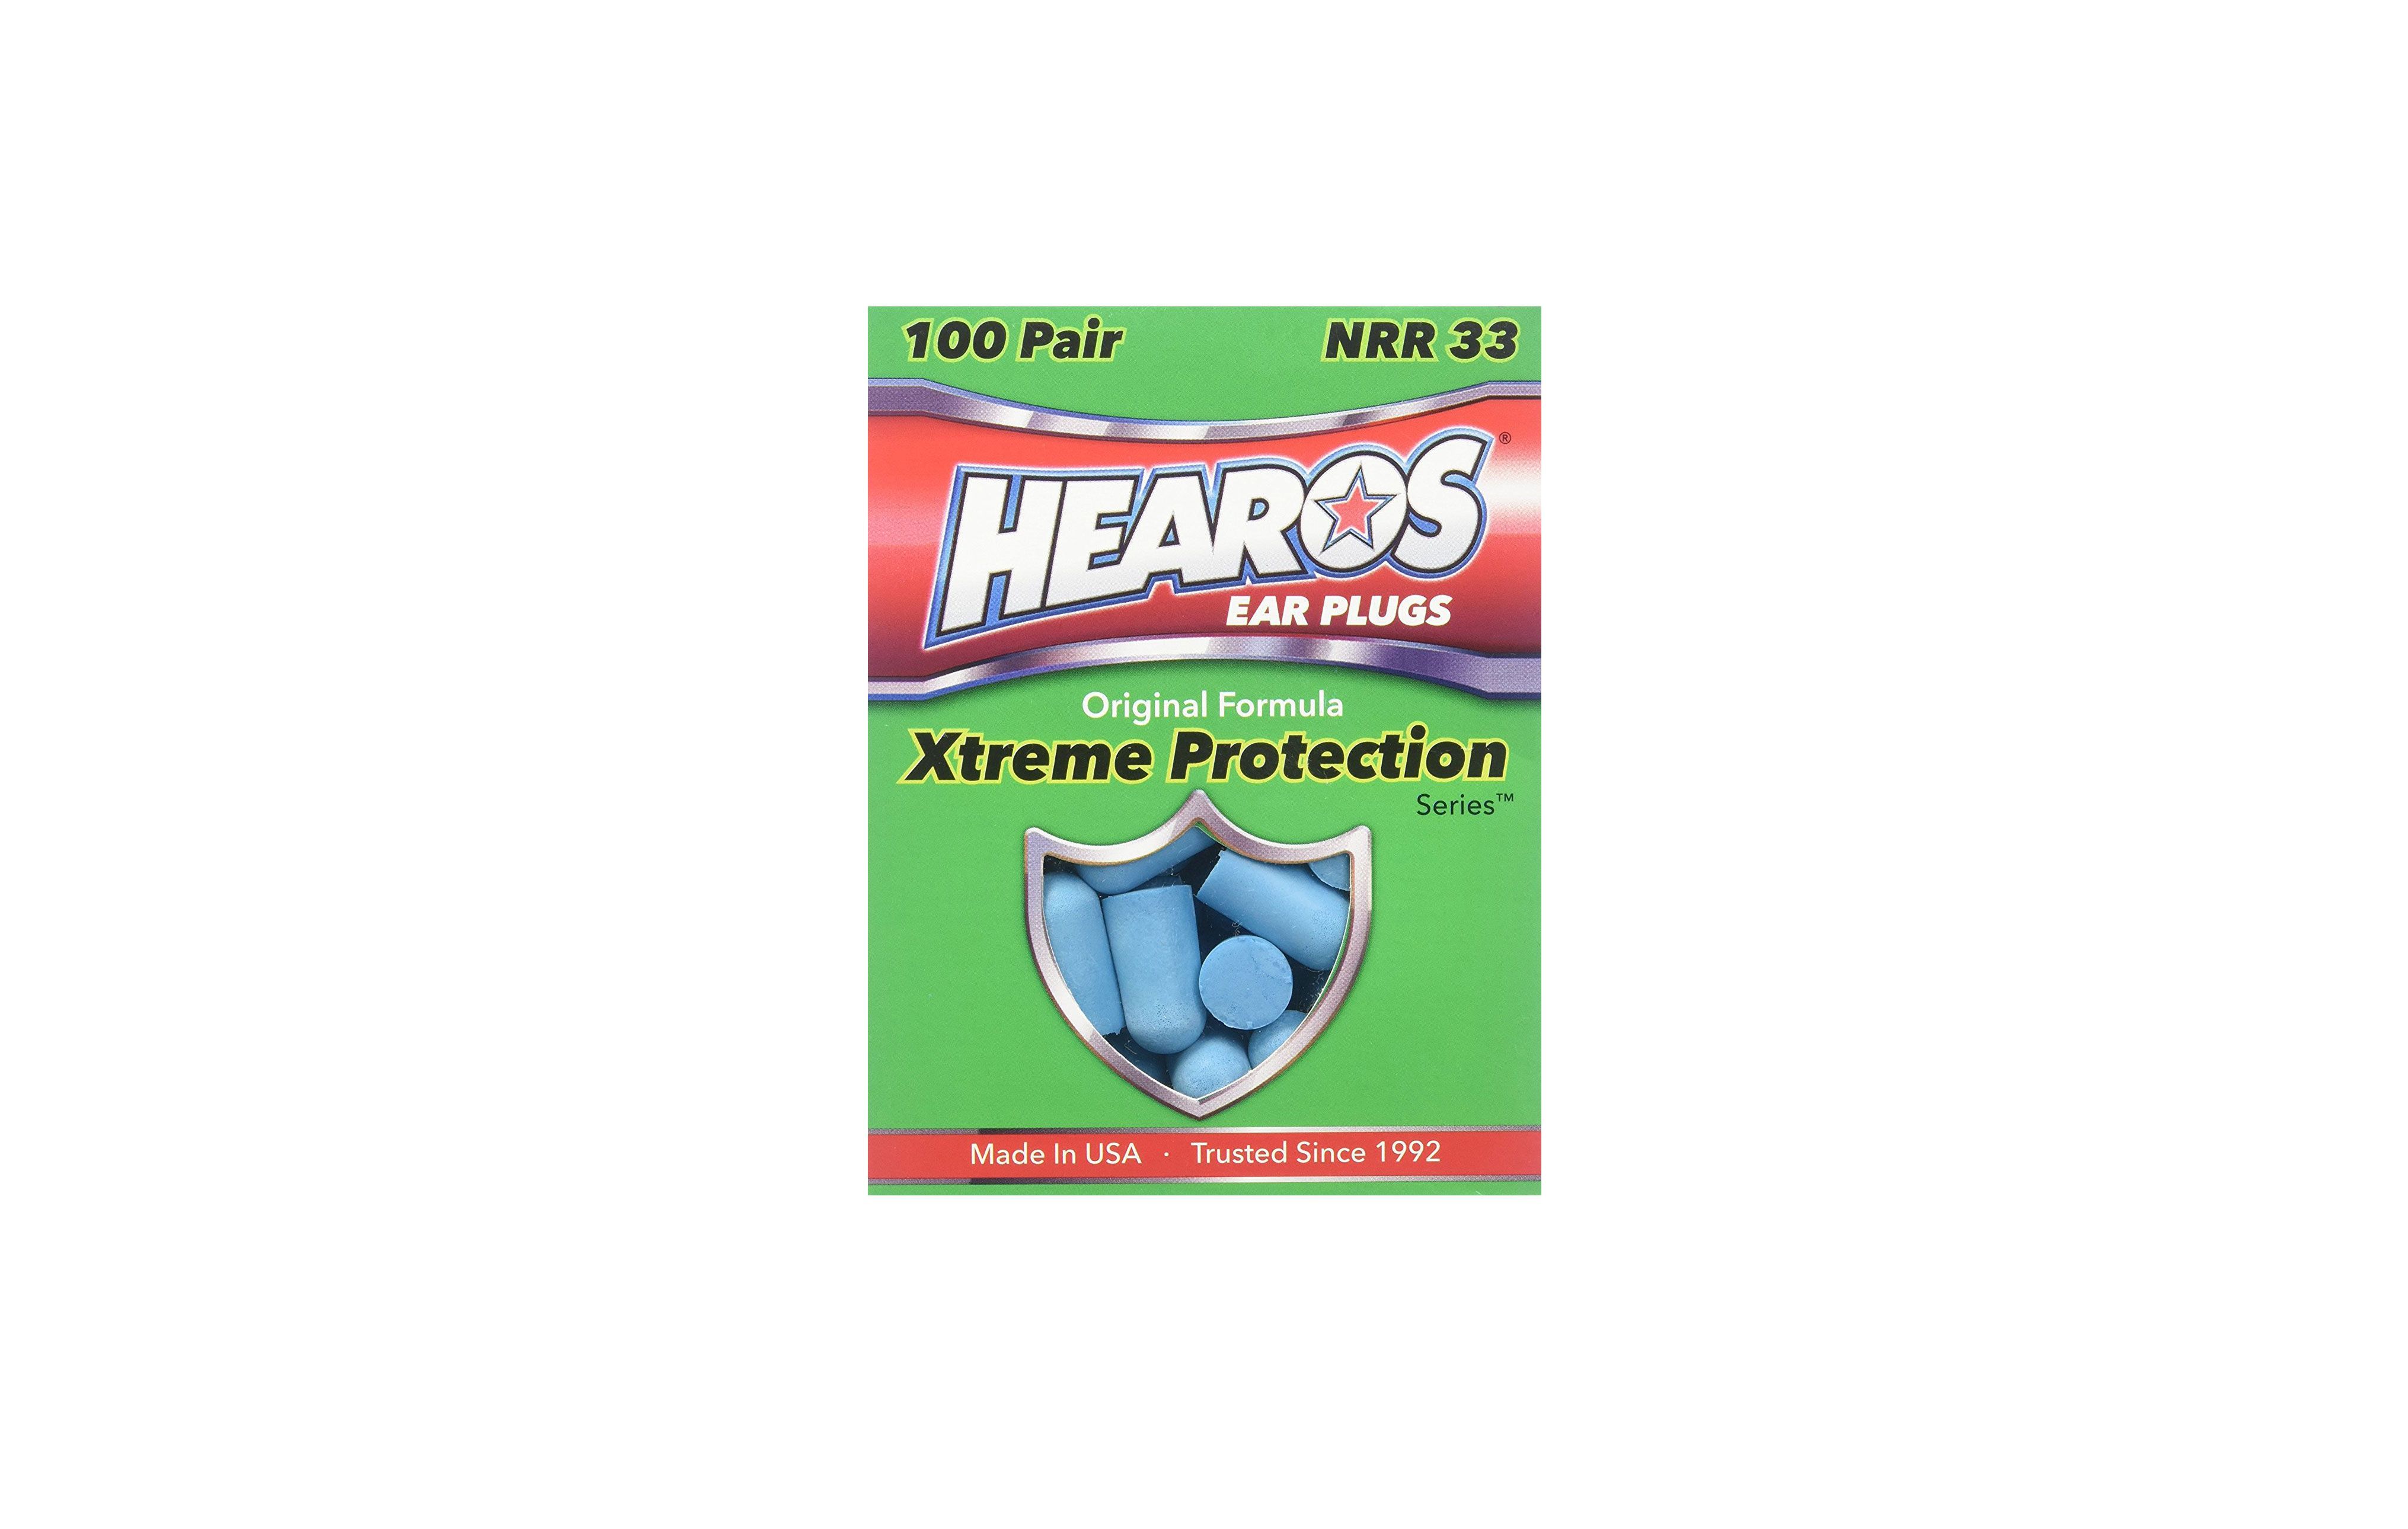 Hearos XTreme Protection Ear Plugs